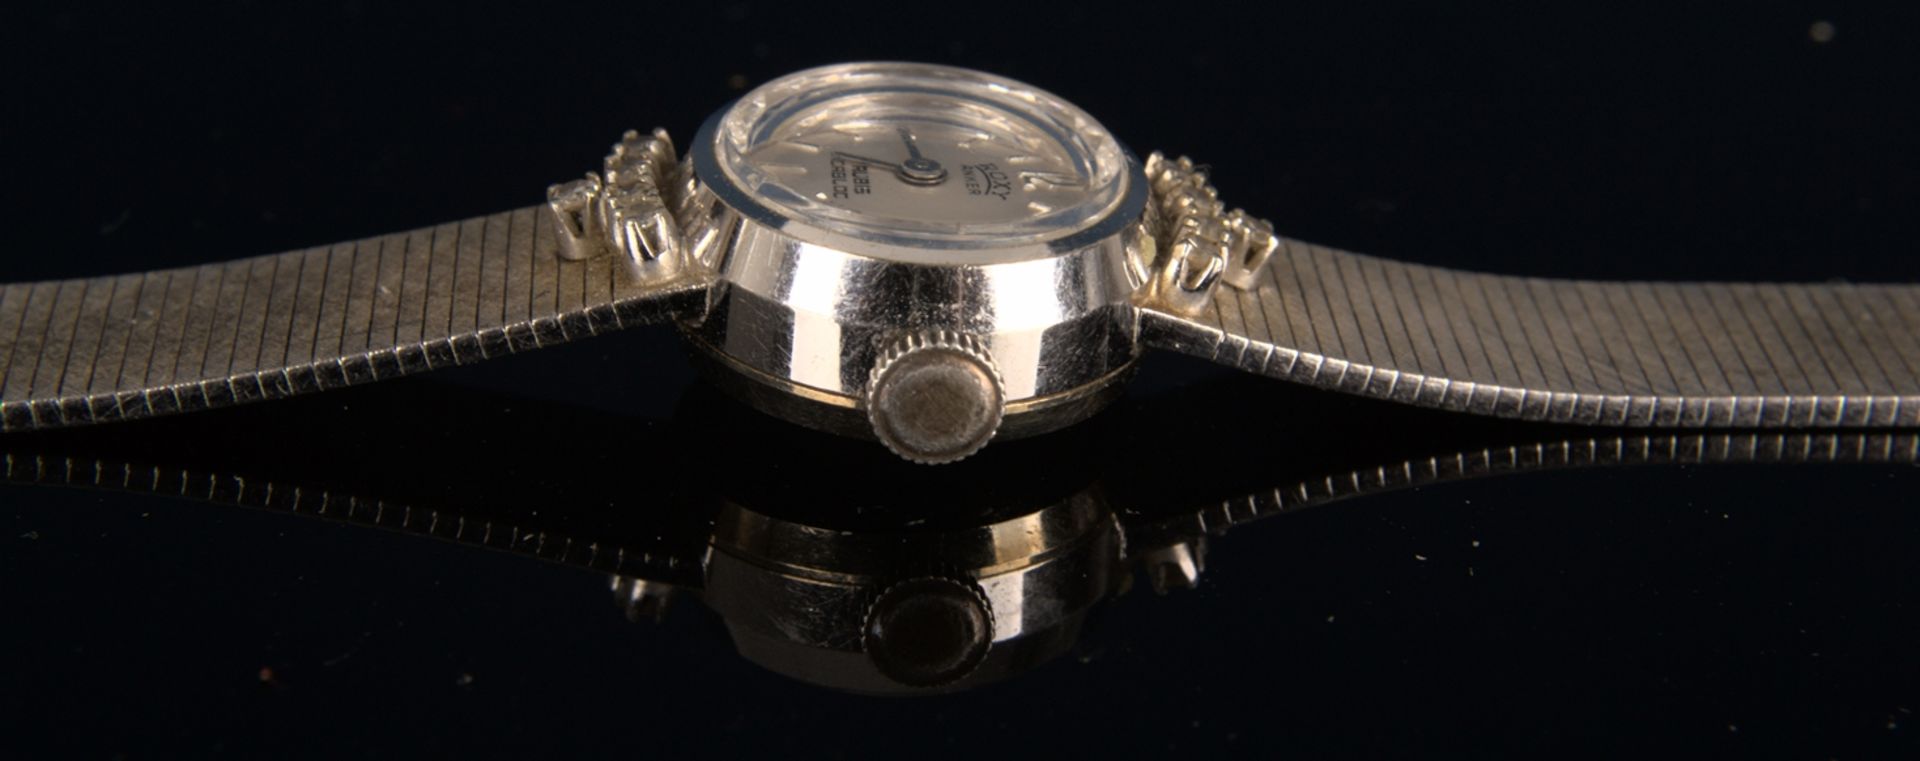 Elegante COCKTAIL - Damenarmbanduhr der Marke "ANKER - ROXY" - 17 Rubis - Incabloc. Handaufzug, - Image 10 of 11